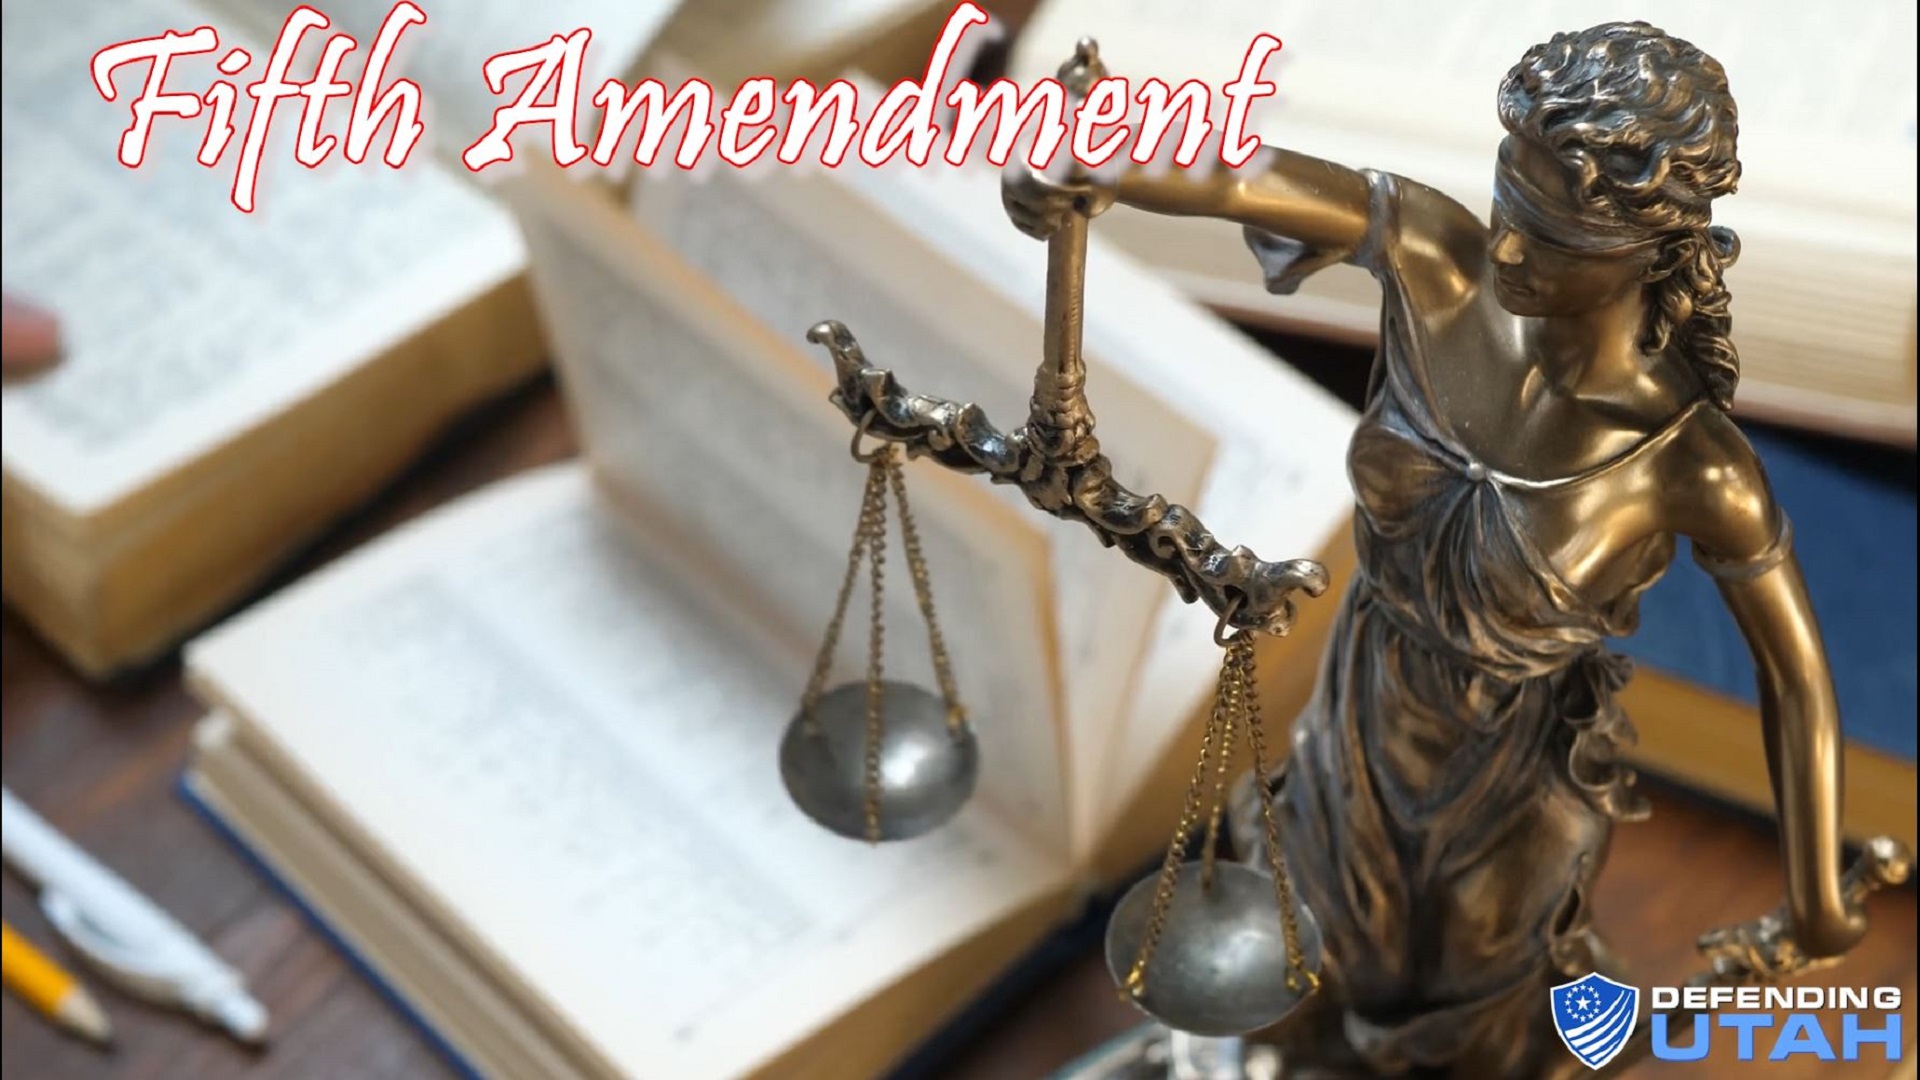 5th amendment